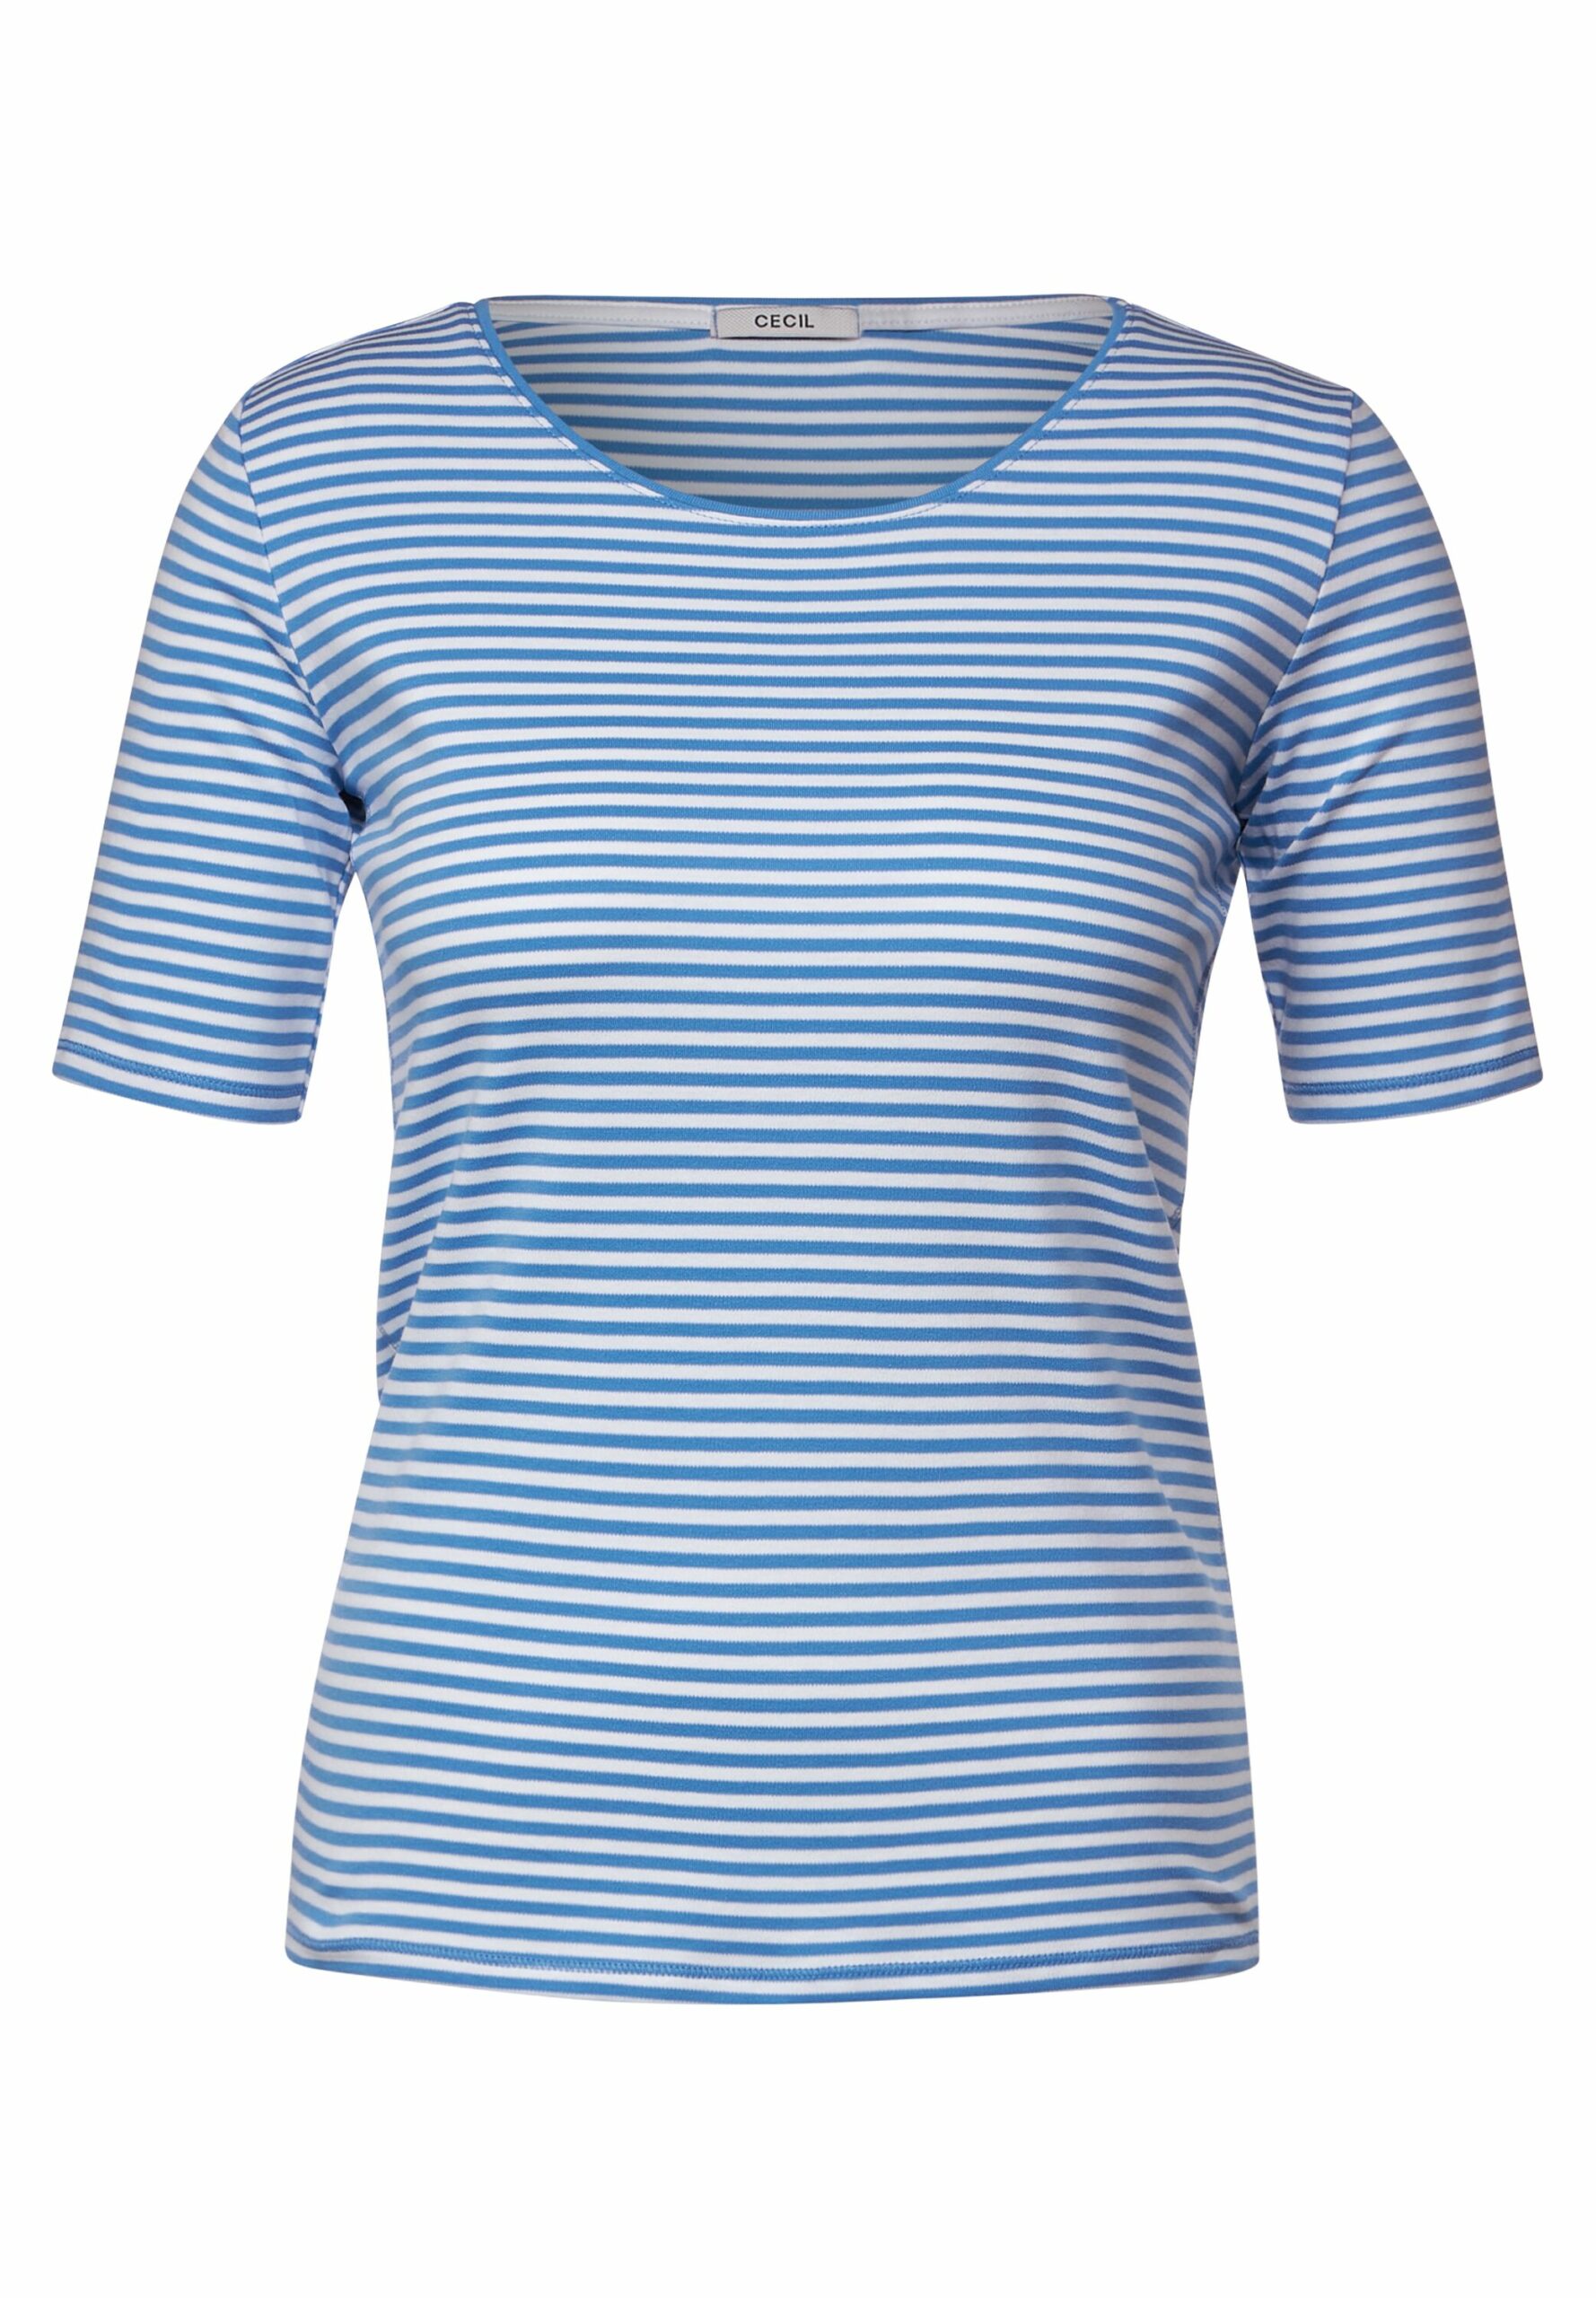 T-Shirt Webshop Damen Modehaus CECIL - Kamlage